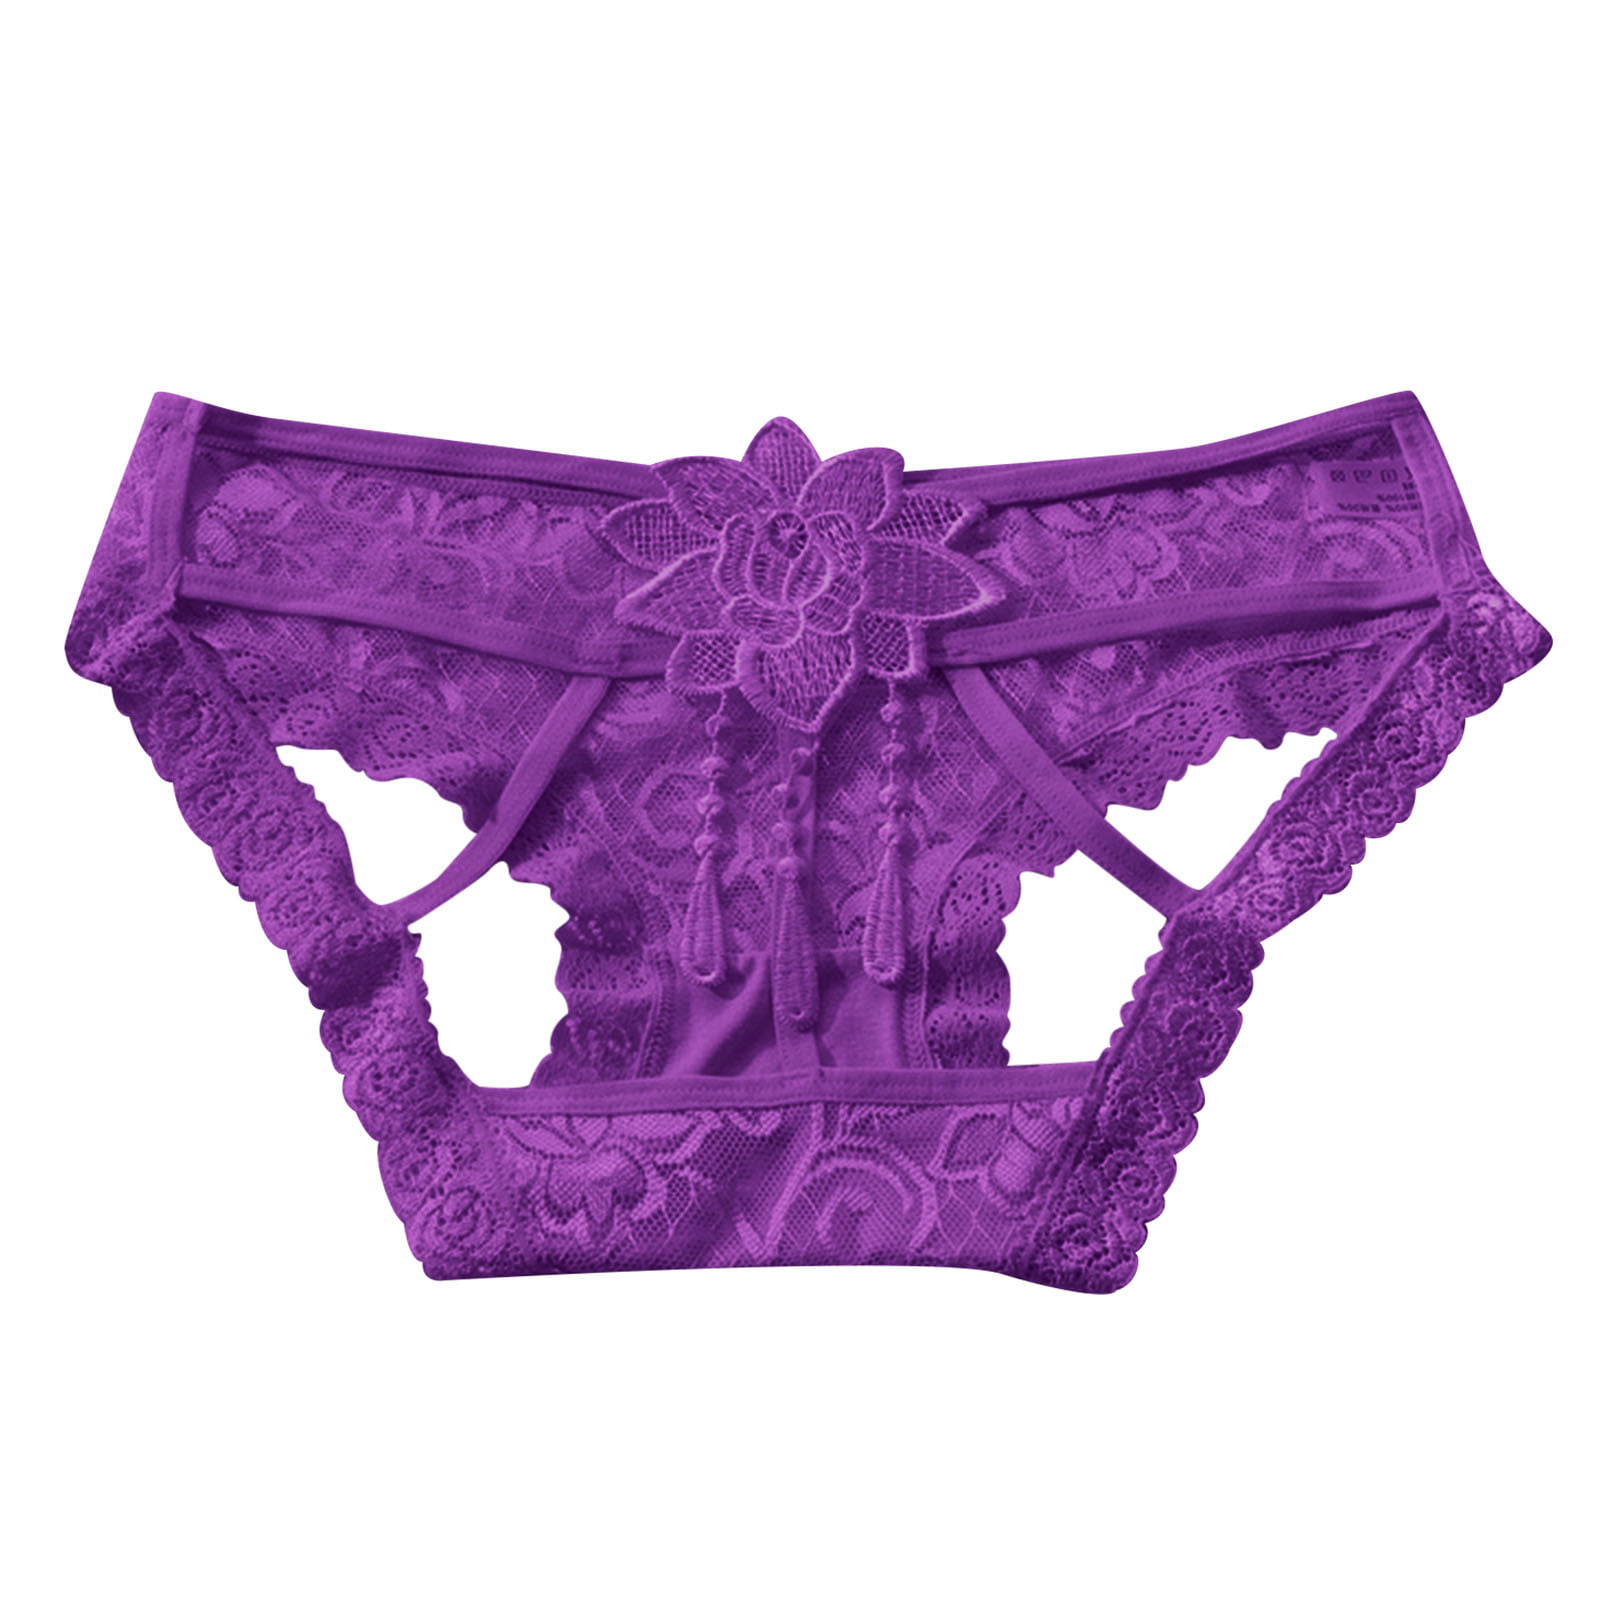 Dropship 2 Pcs Women Lace Sexy Bikini Panties Pack Flower Mesh Underwear  Plus Size Boyshorts Panties,Purple Green to Sell Online at a Lower Price